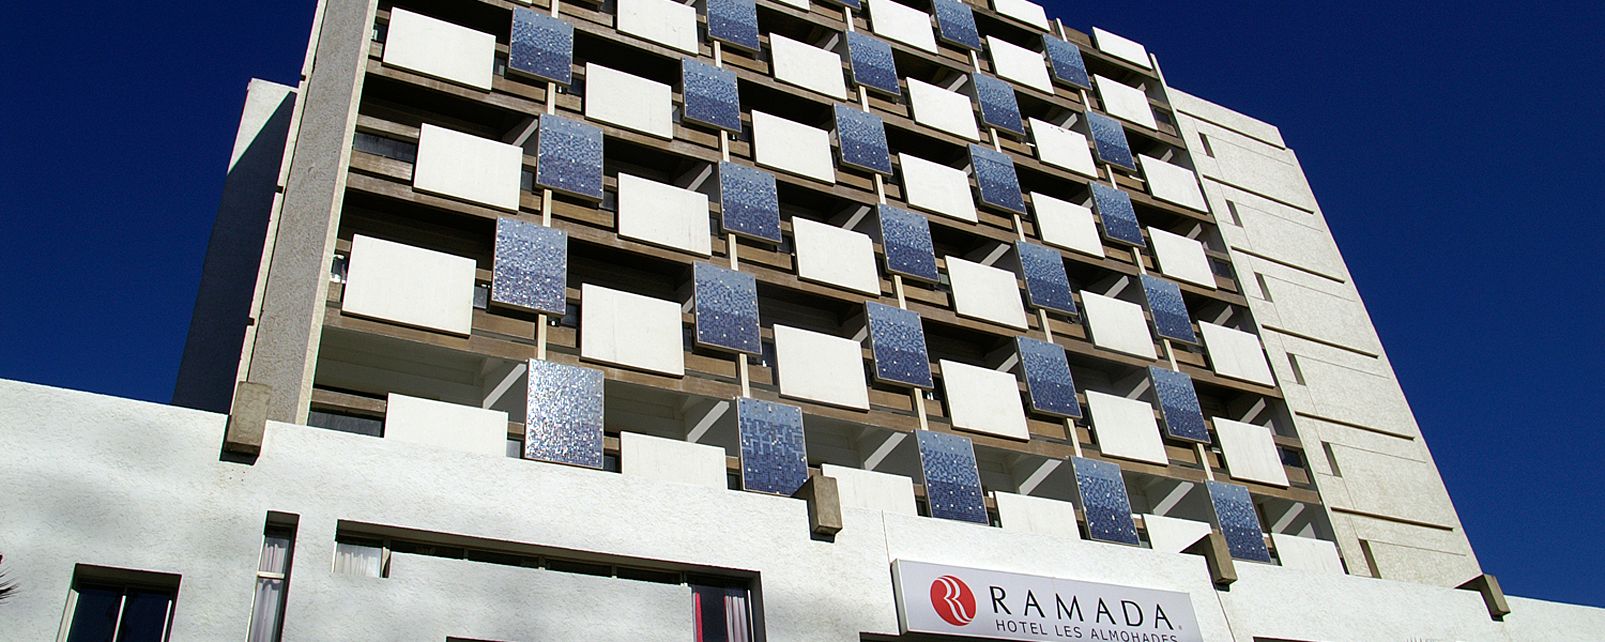 Hotel Ramada Les Almohades